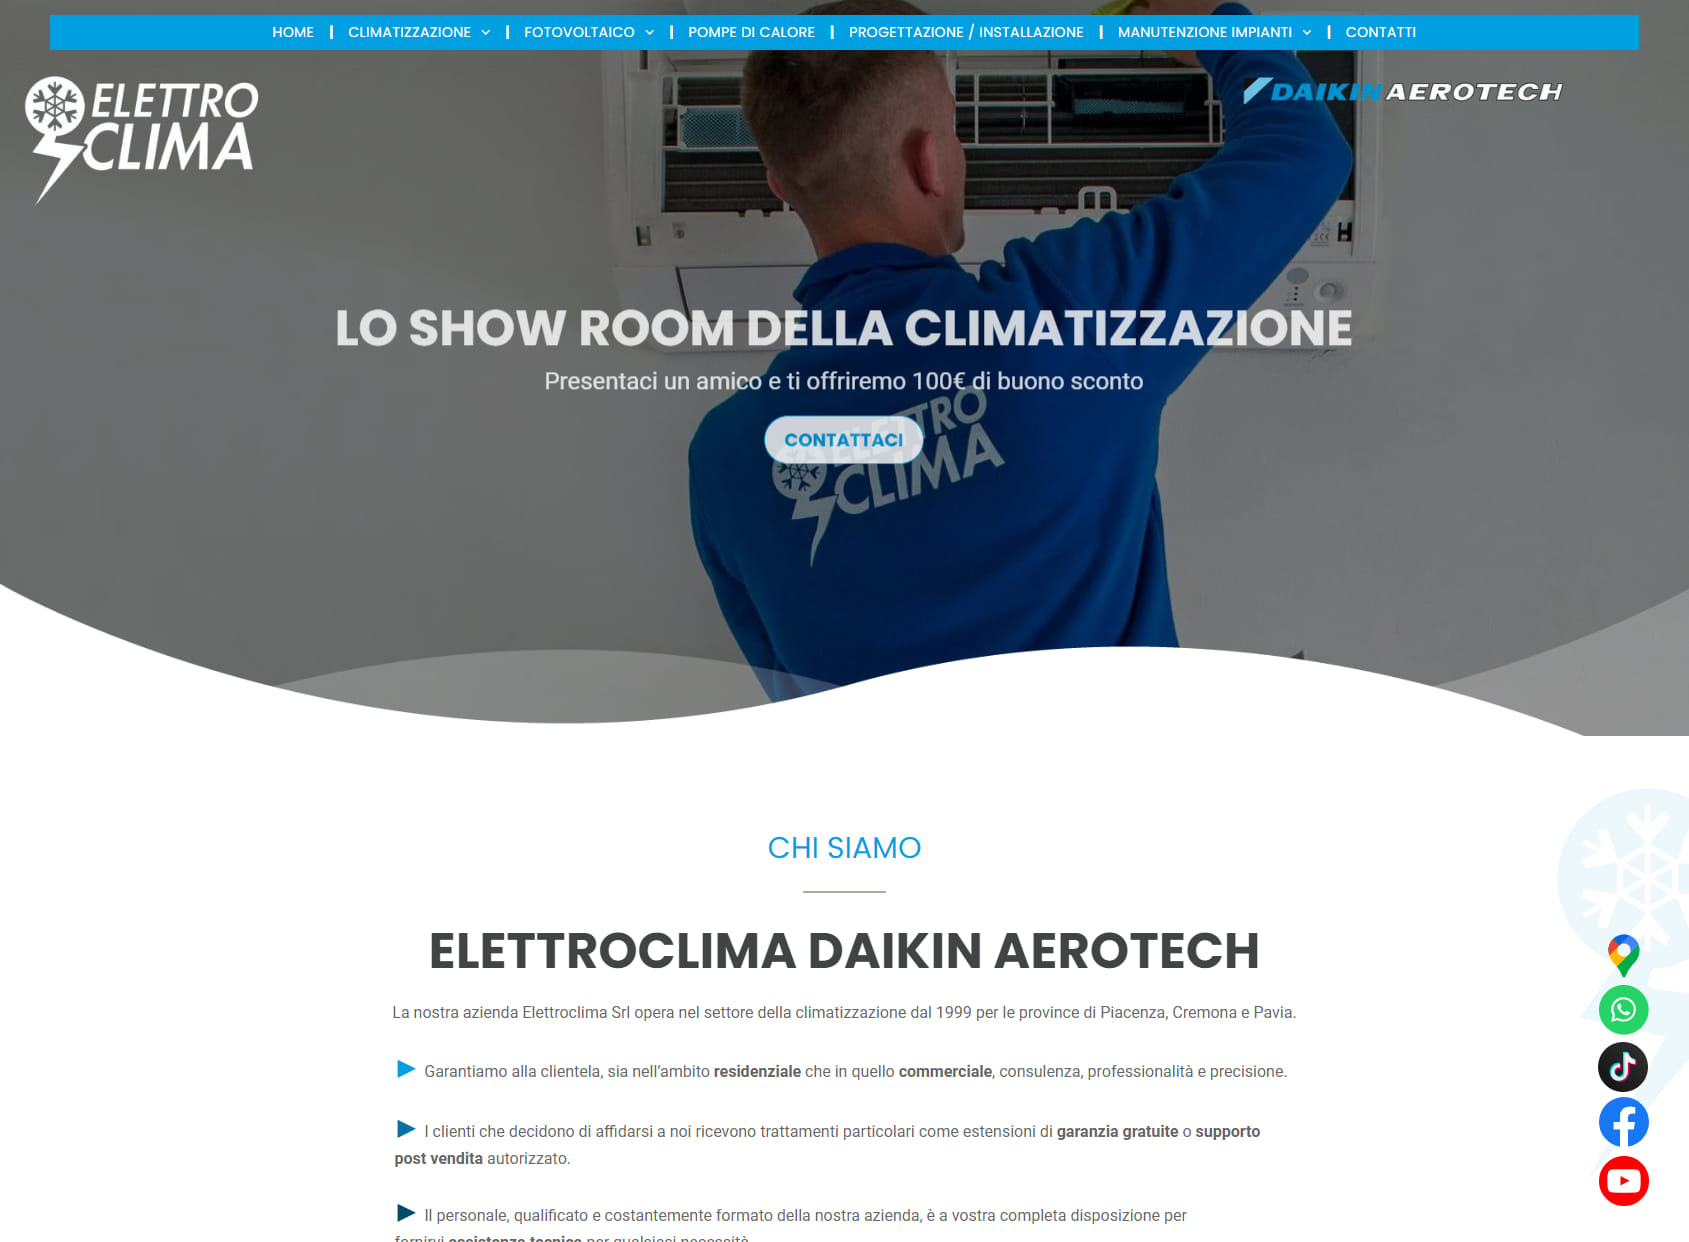 Elettroclima S.r.l. - Daikin Aerotech